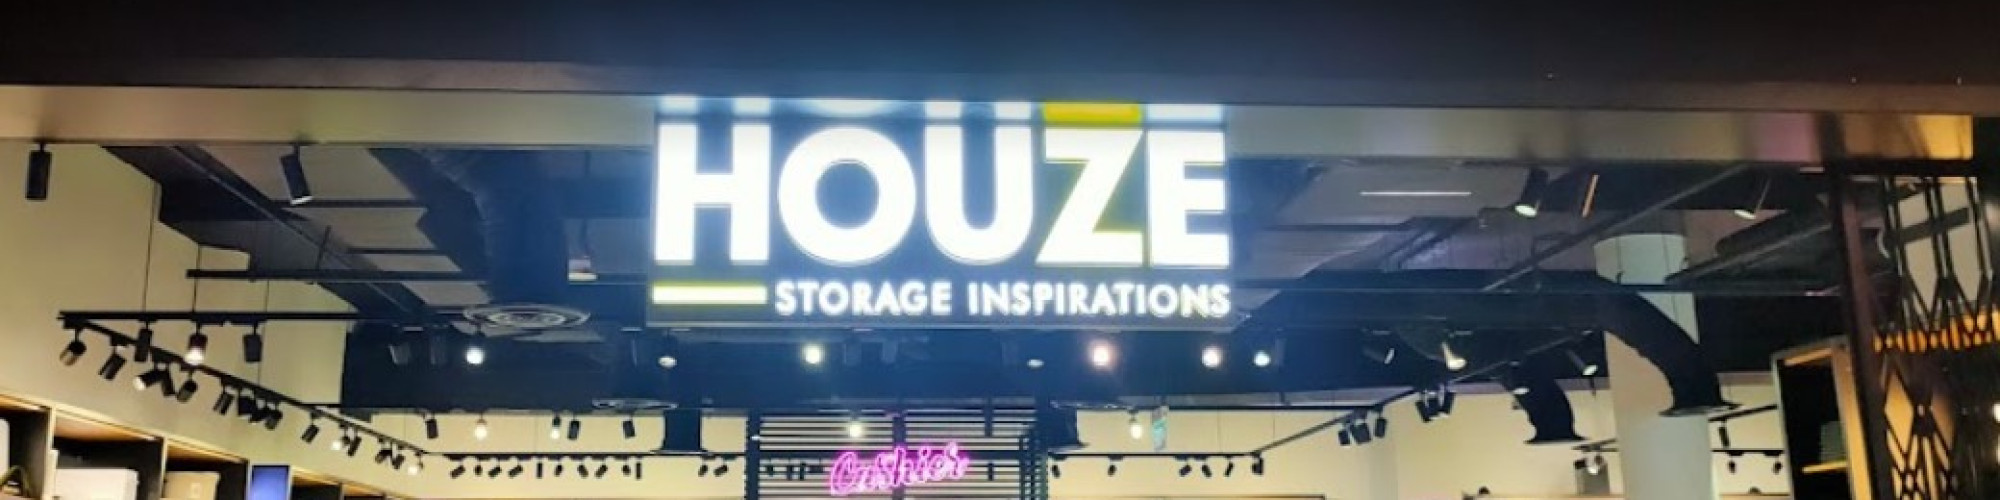 HOUZE - The Homeware Superstore